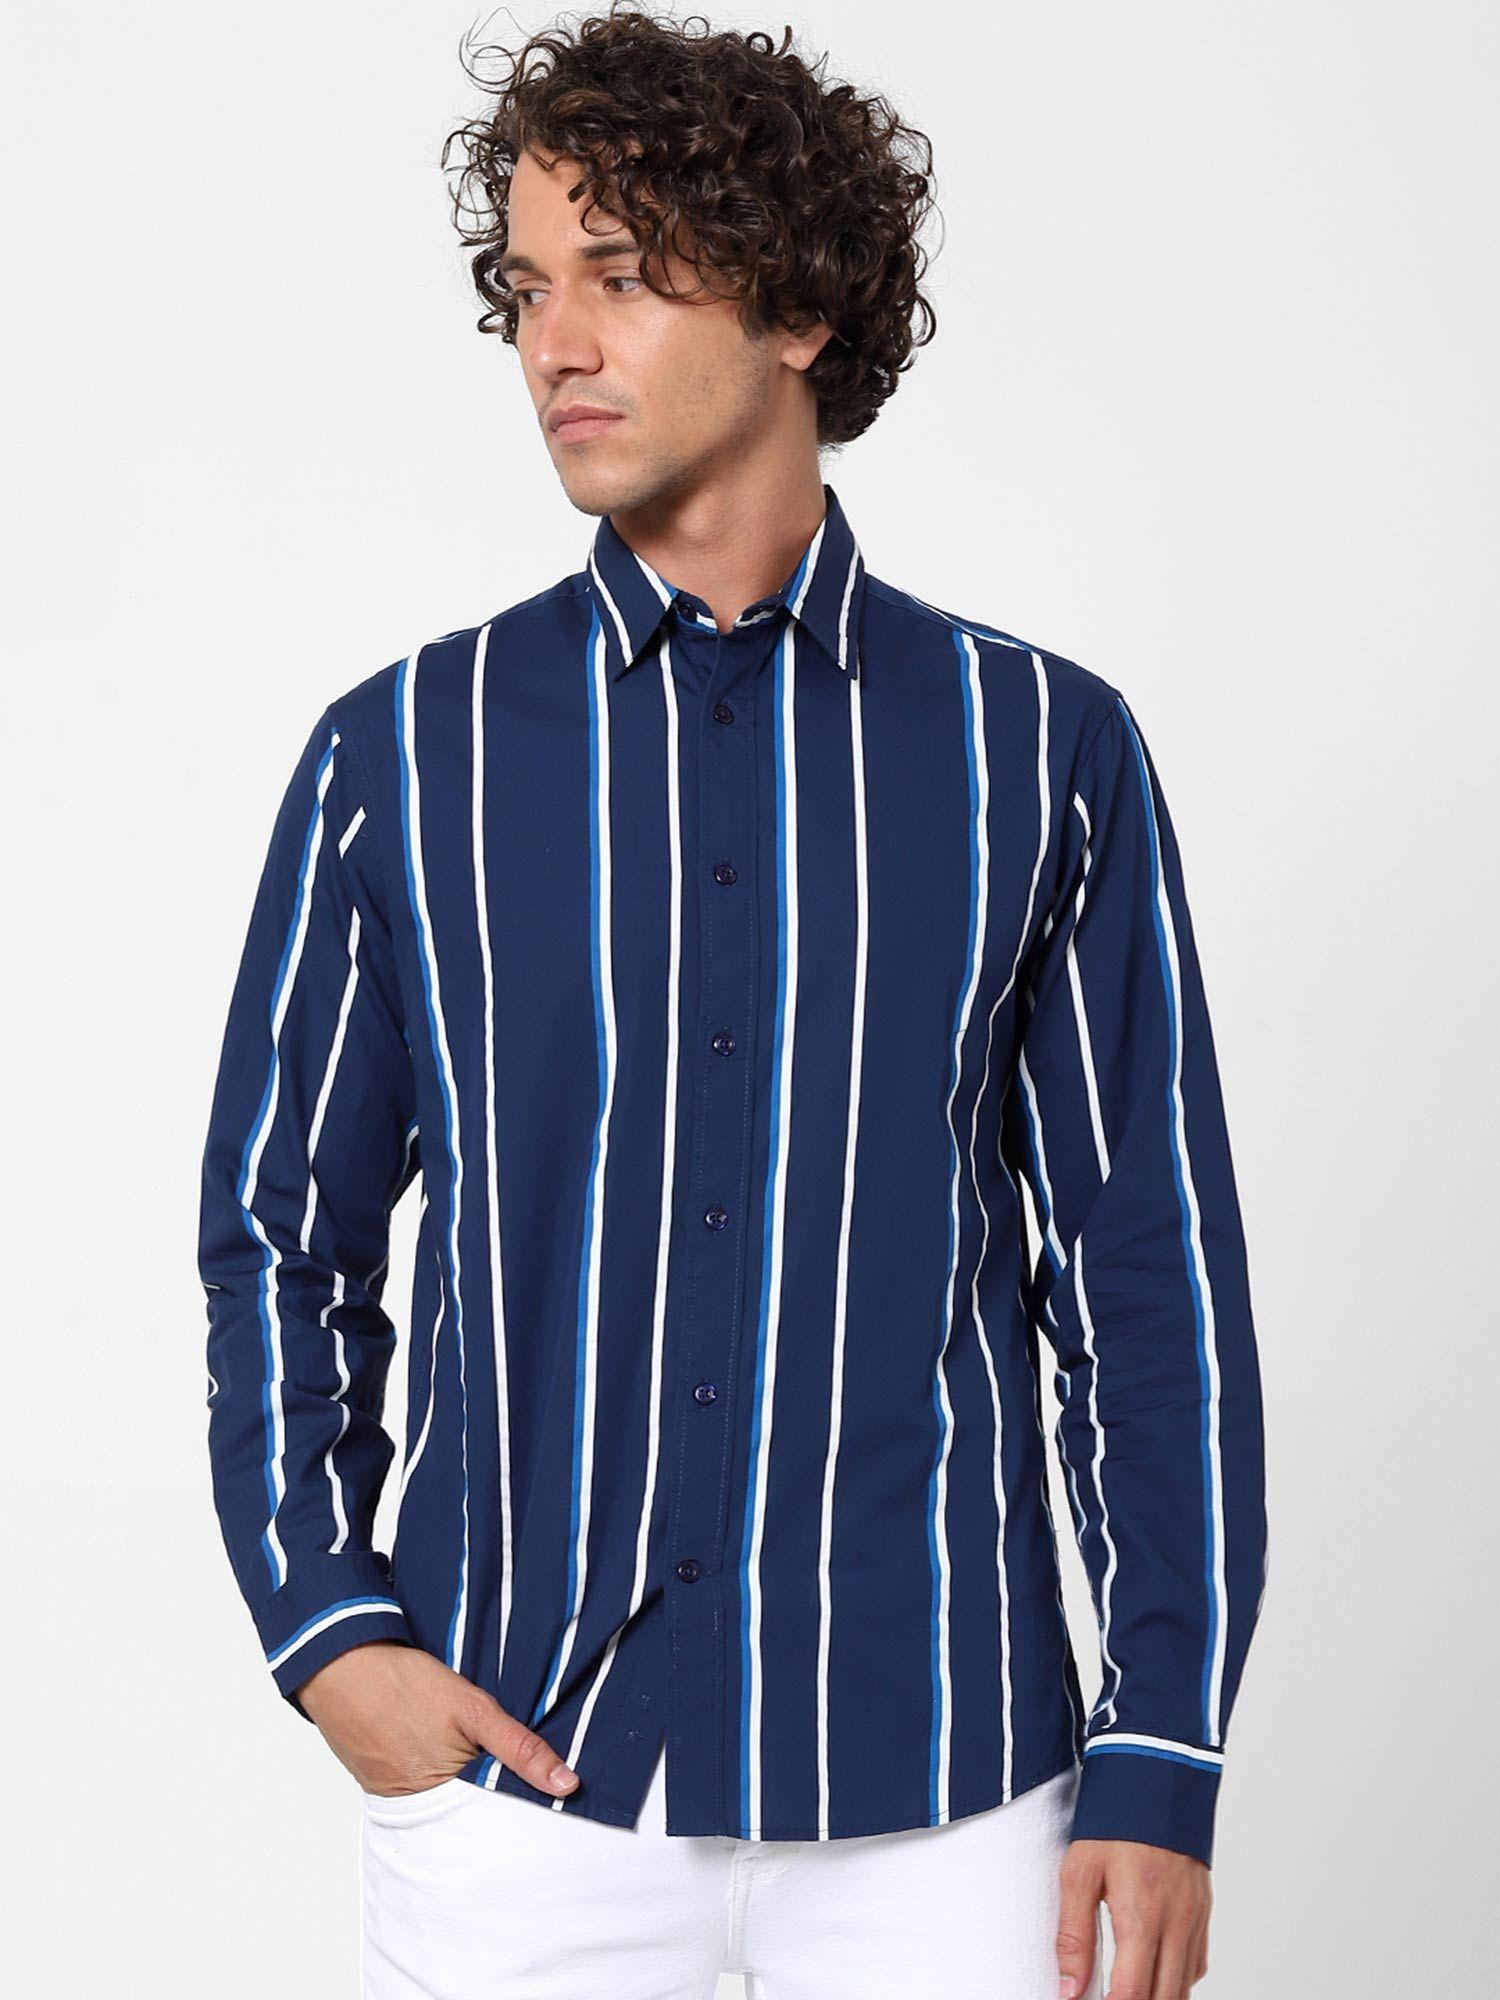 men's navy blue casual shirts